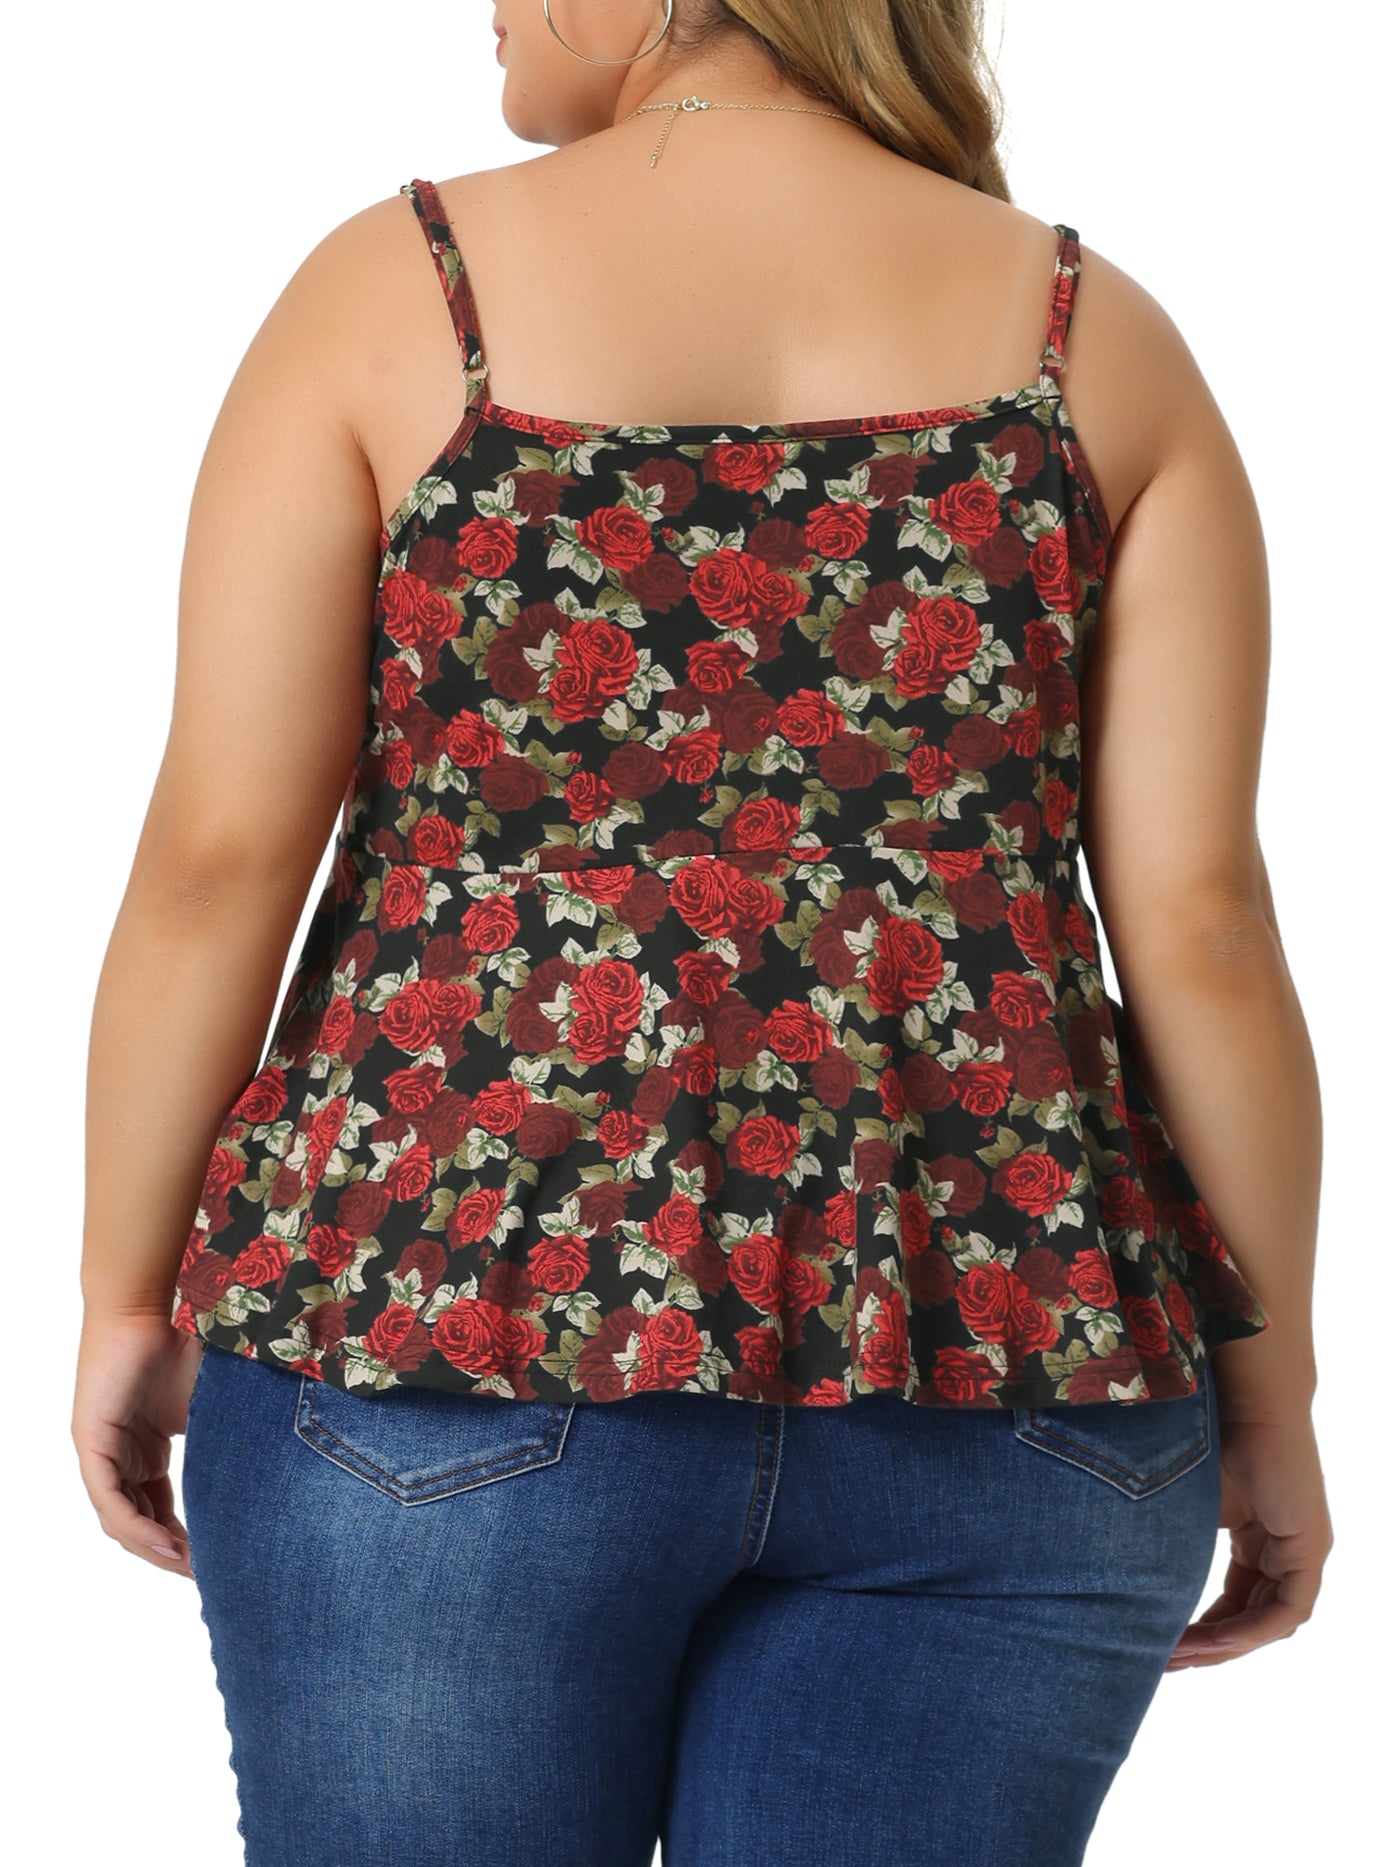 Bublédon Plus Size Tank Tops for Women V Neck Adjustable Strap Loose Fit Flowy Rose Floral Sleeveless Shirt